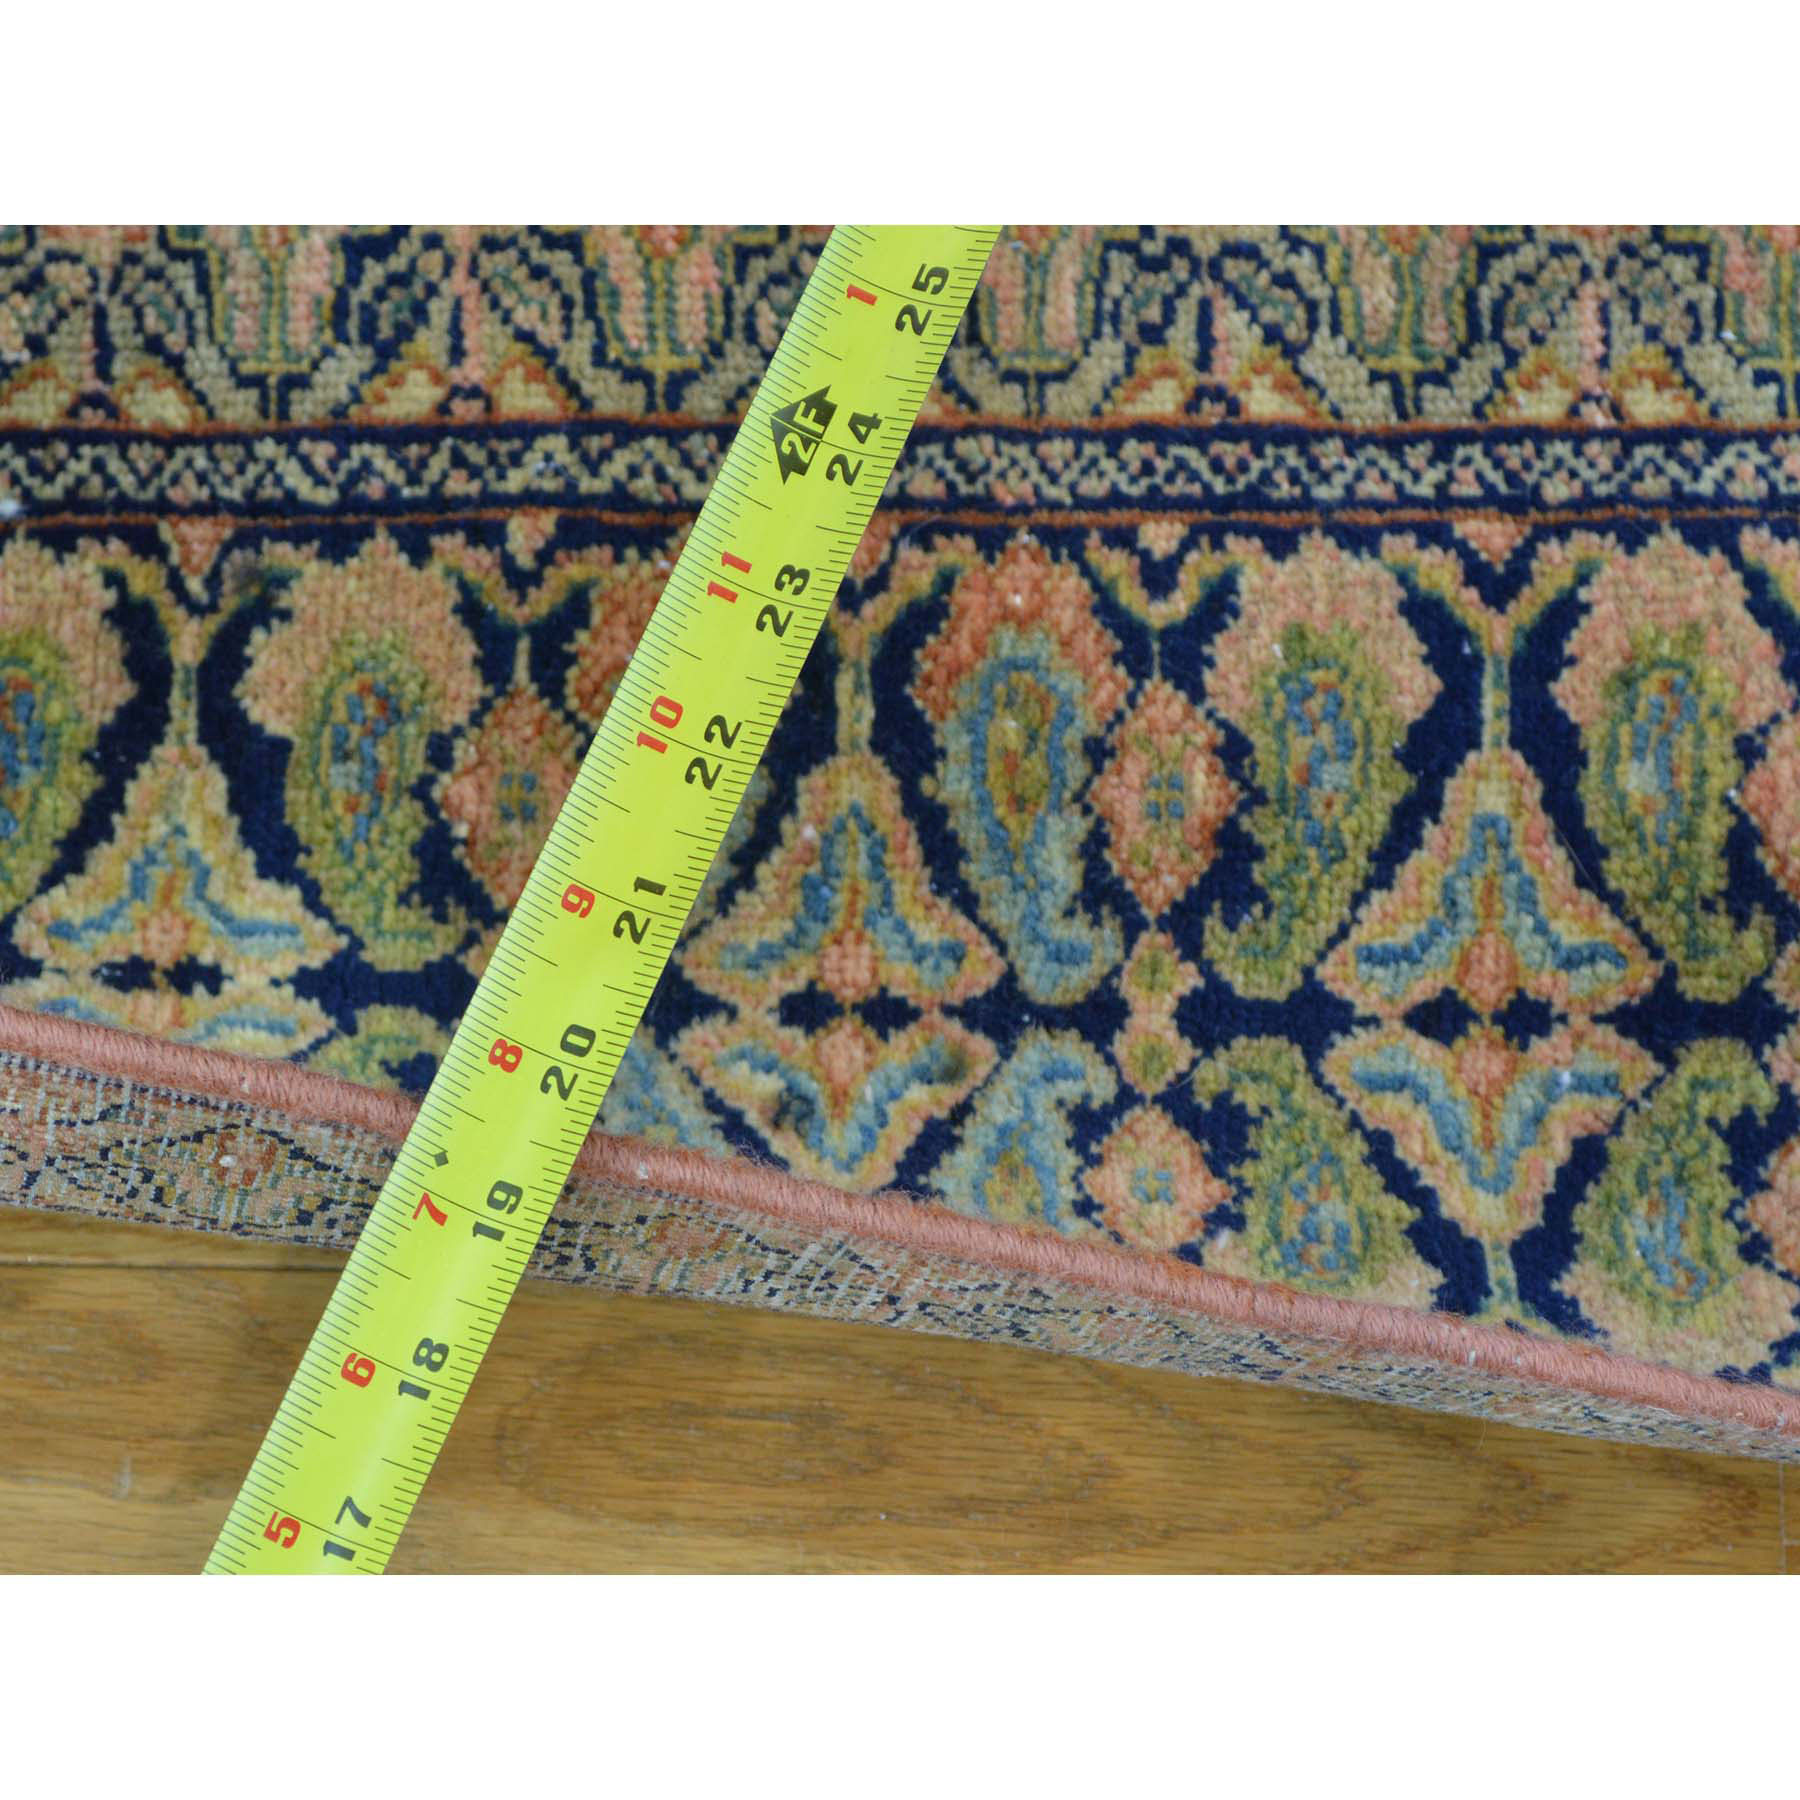 7'2"x9'10" Antique Persian Tabriz Full Pile Hand Woven Oriental Rug 